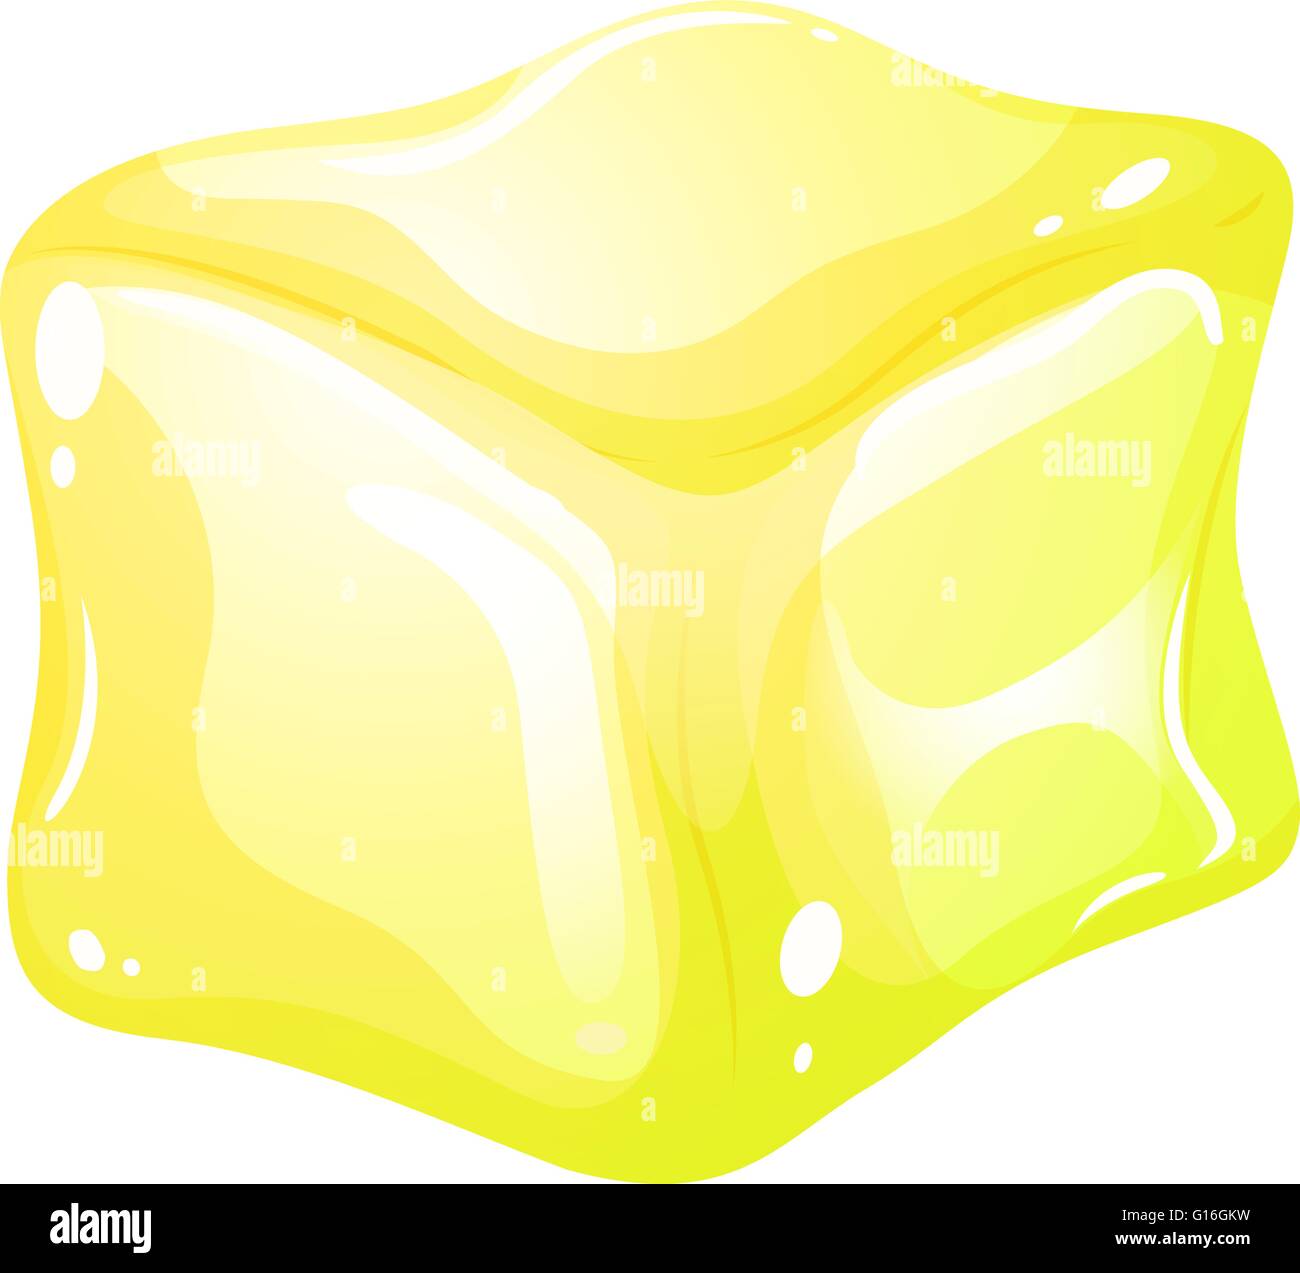 Yellow ice cube illustration Stock Vector